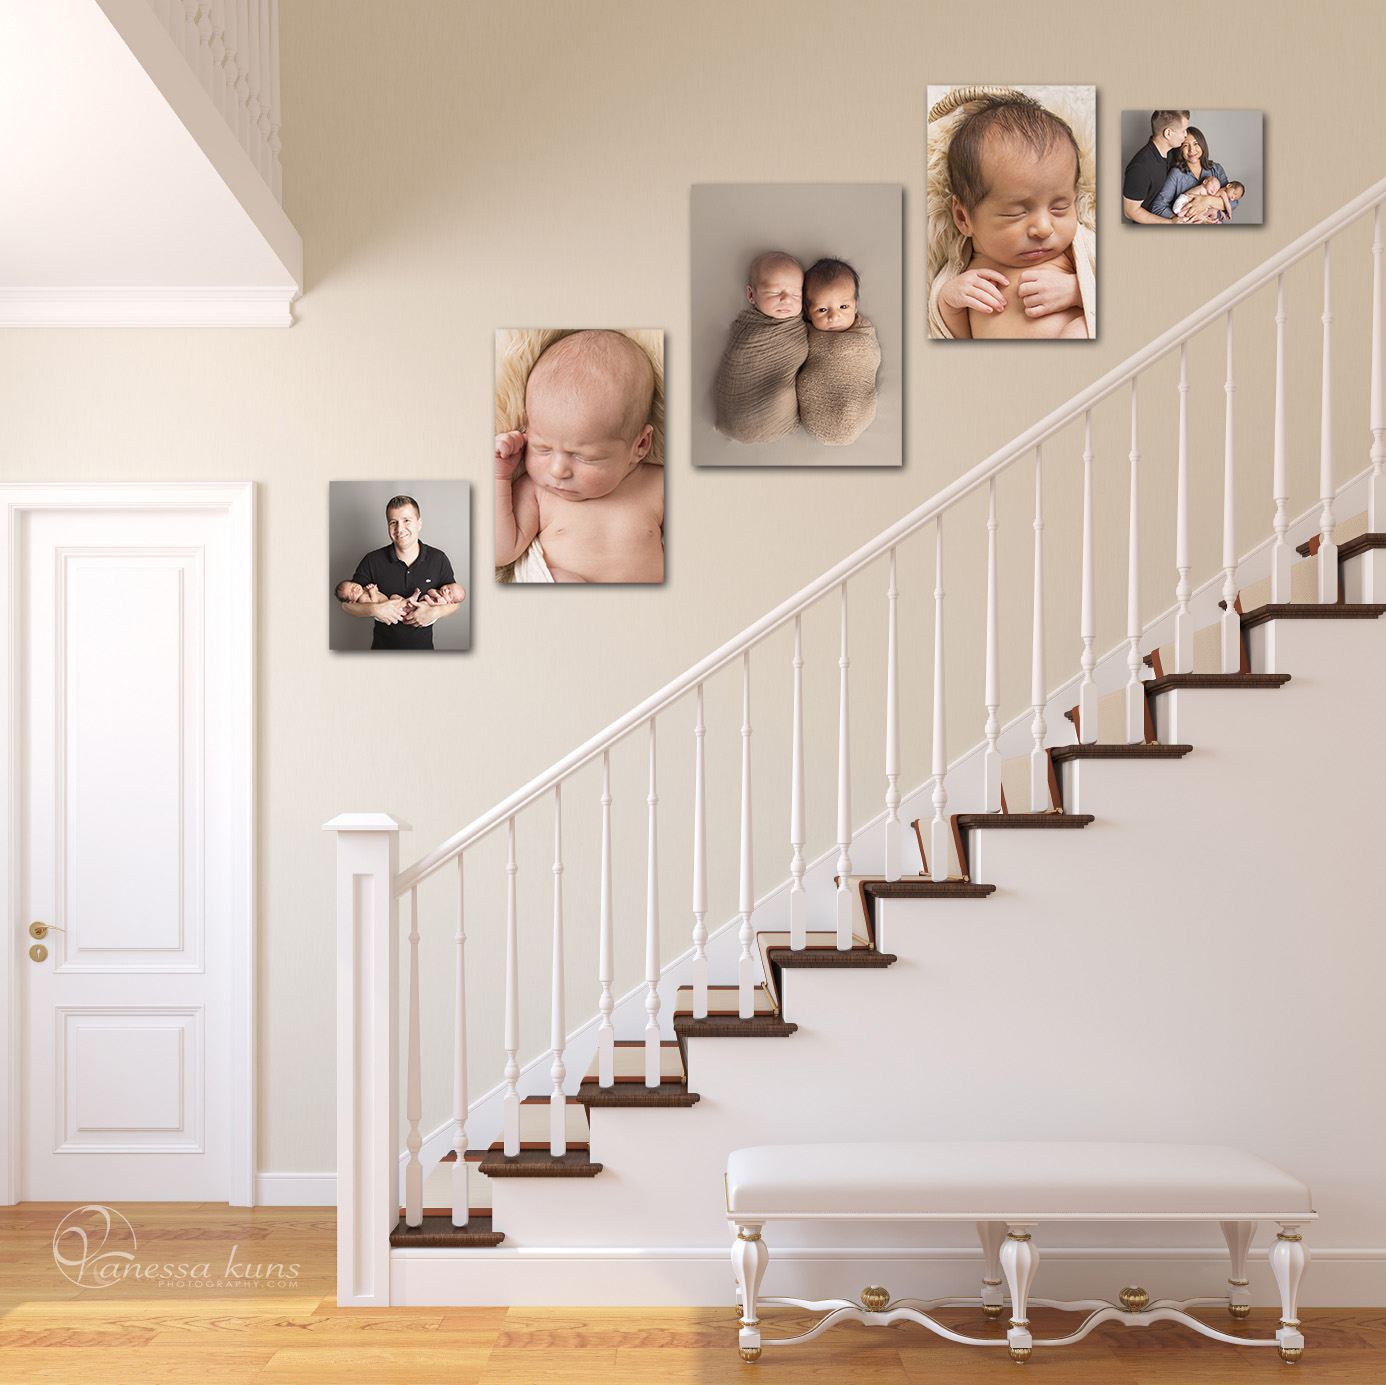 vanessa kuns photography staircase wall display